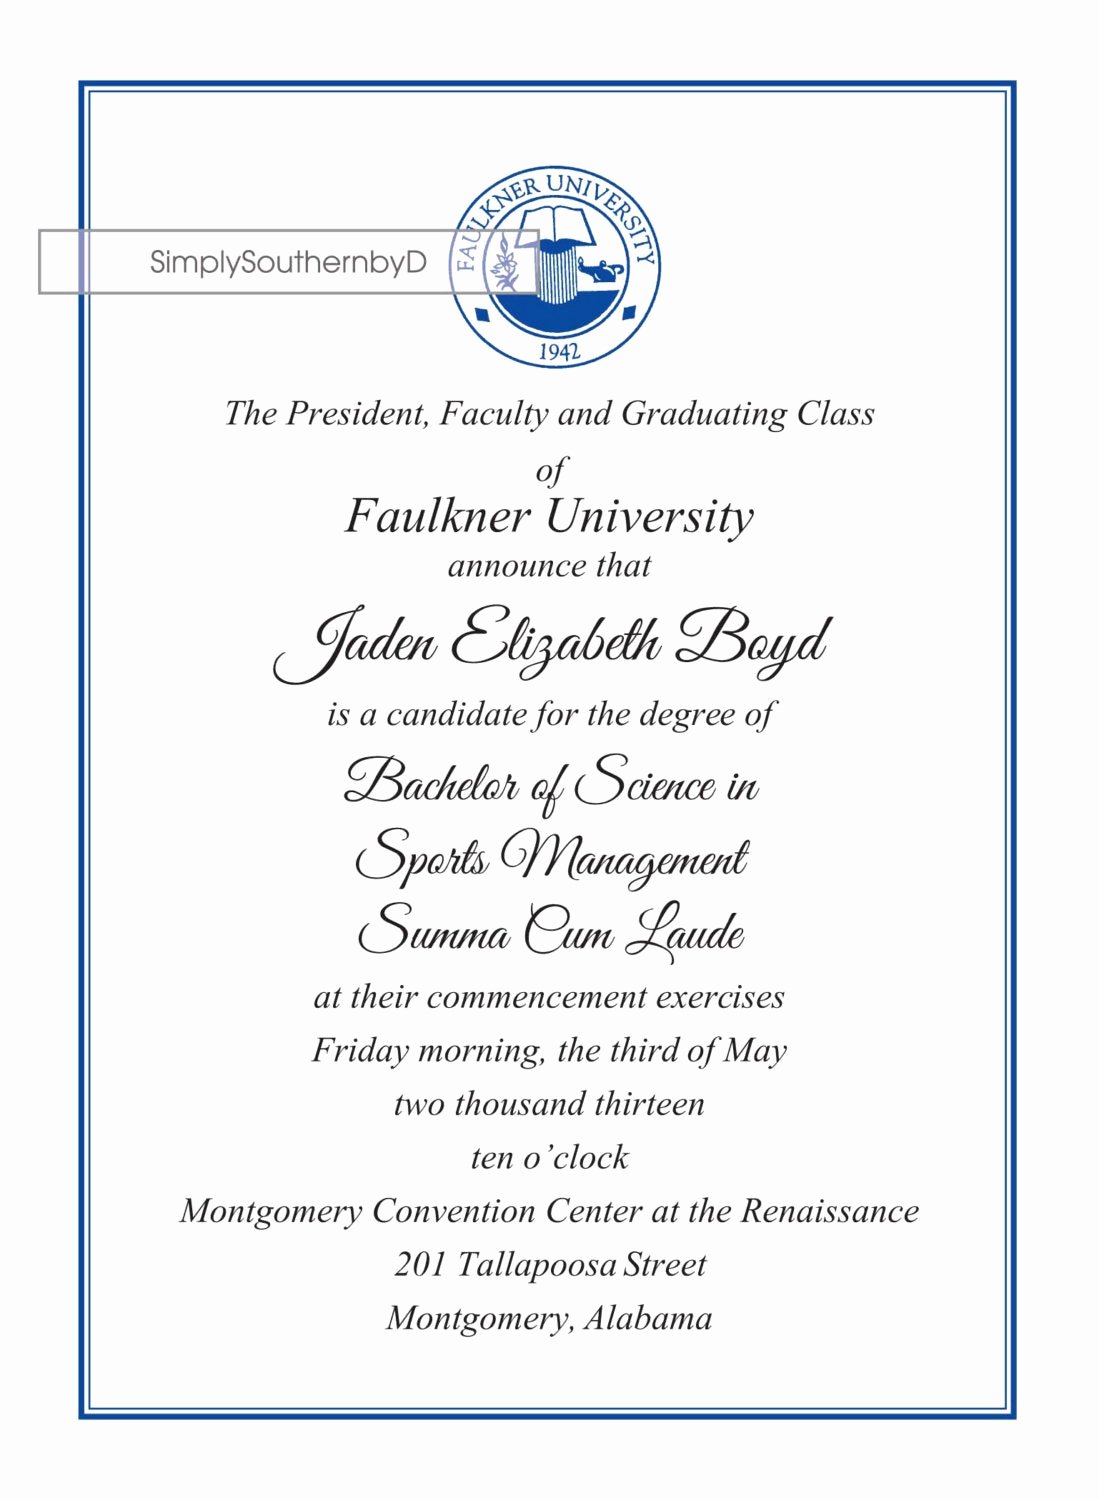 Graduation Invitation Announcement Wording Elegant College Graduation Announcements by Simplysouthernbyd On Etsy